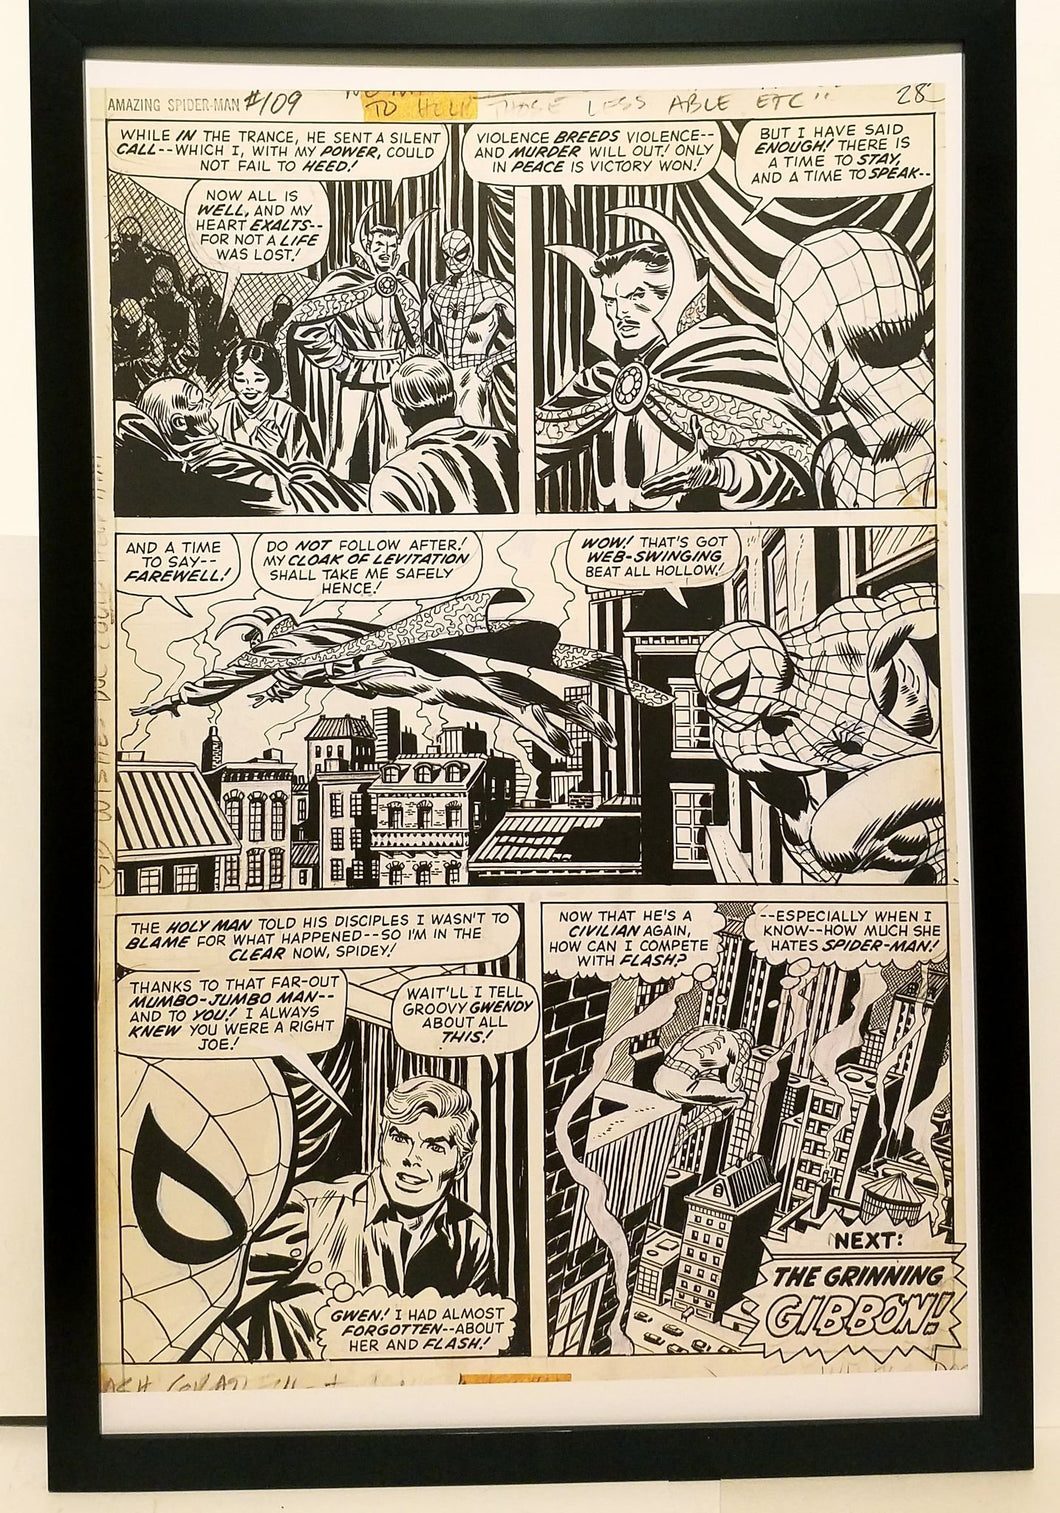 Amazing Spider-Man #109 pg. 21 John Romita 11x17 FRAMED Original Art Poster Marvel Comics